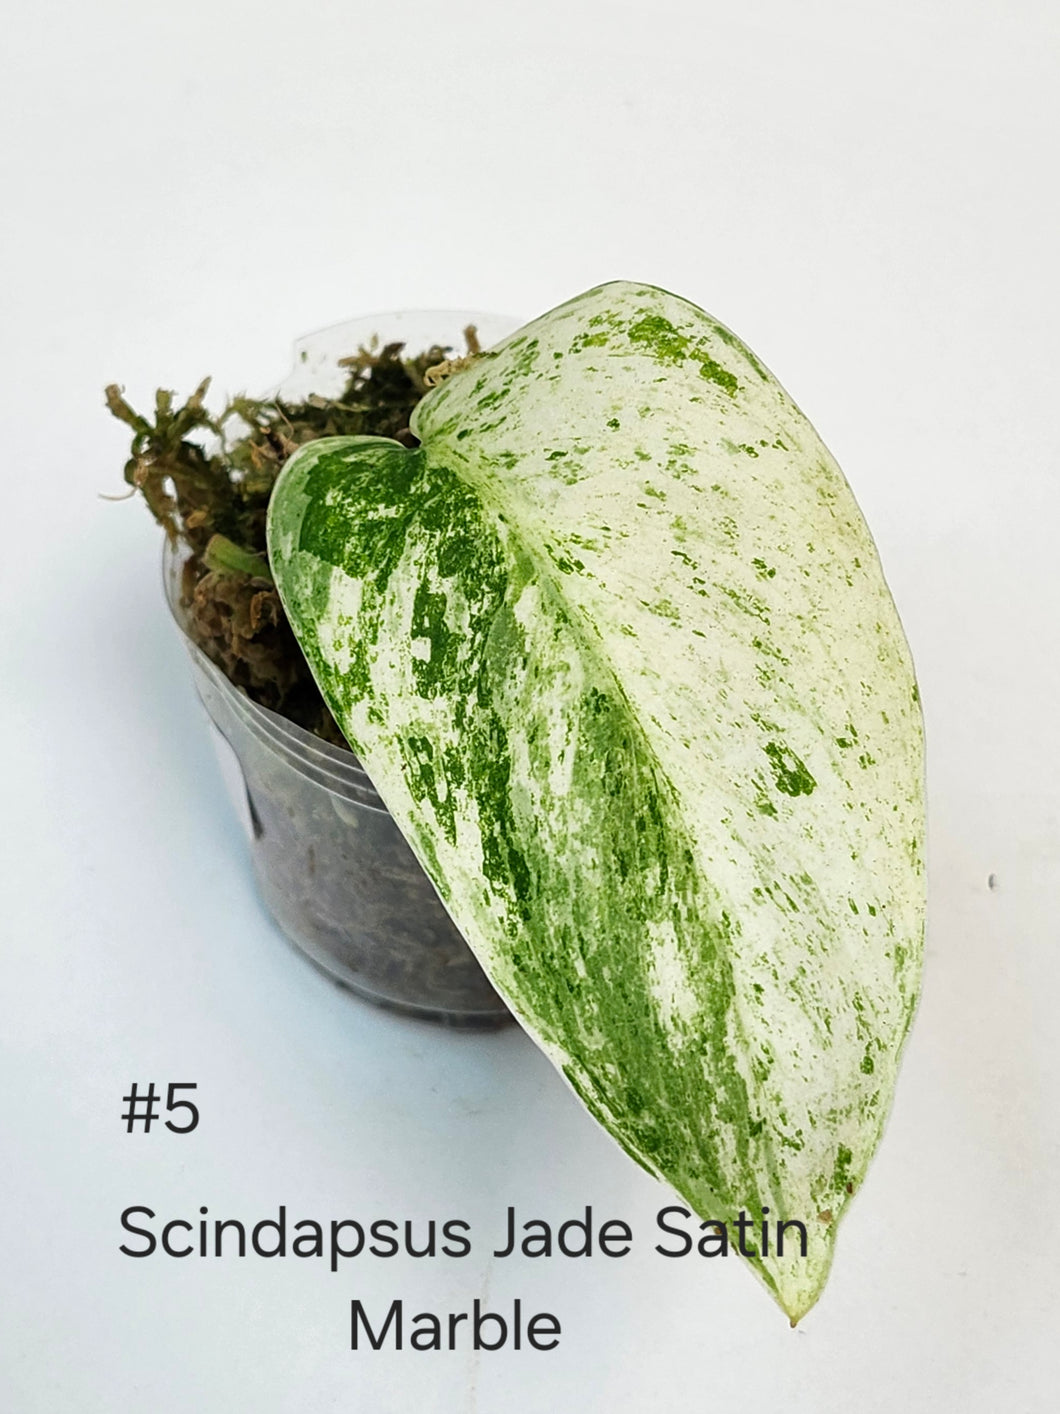 Scindapsus jade satin marble #5